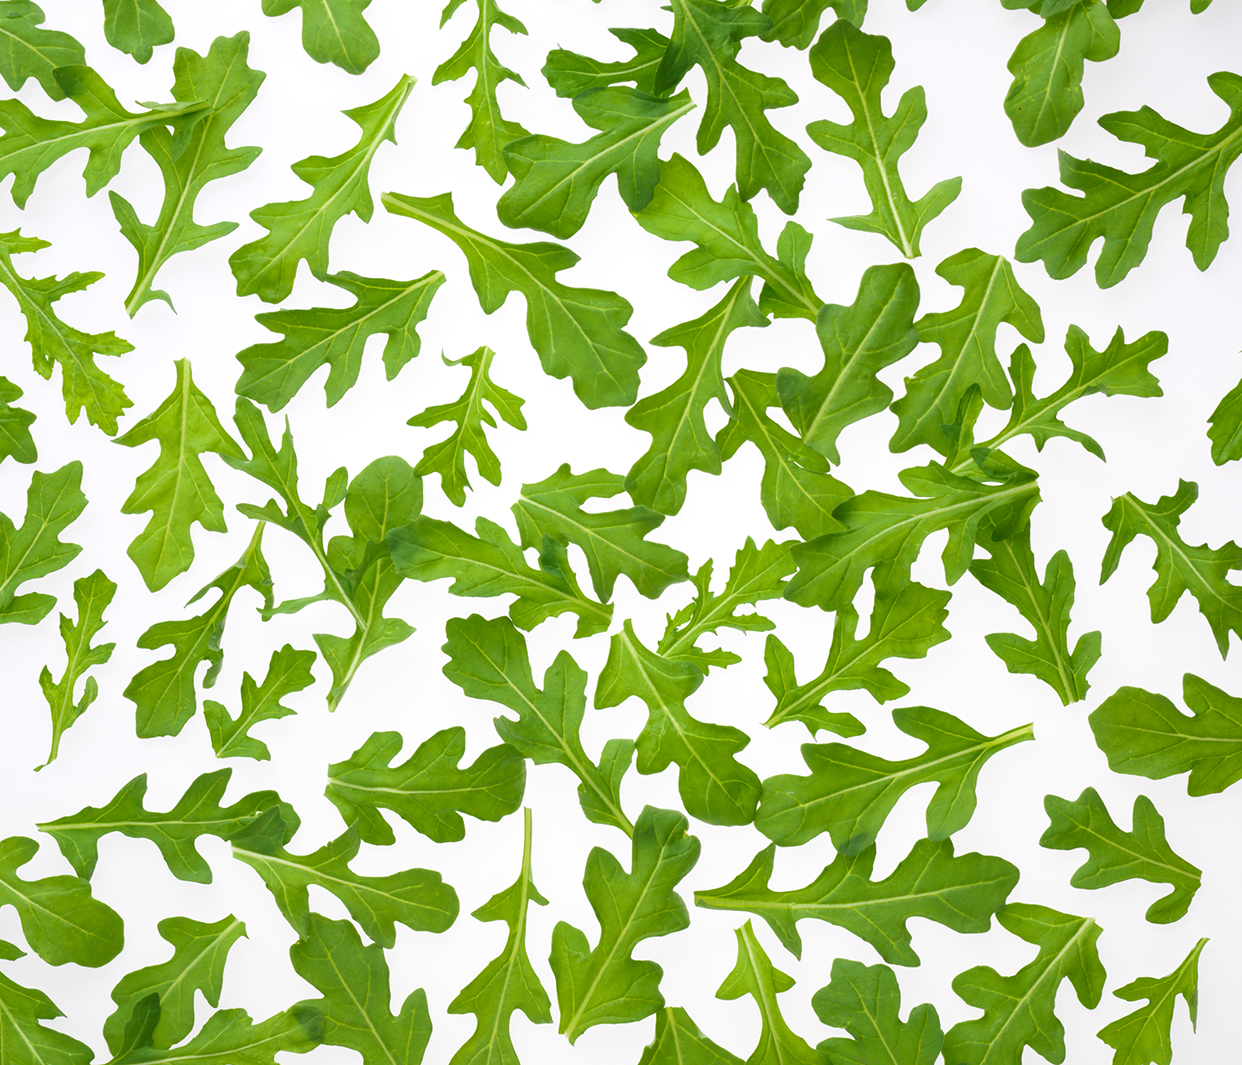 Arugula Leaves Picture